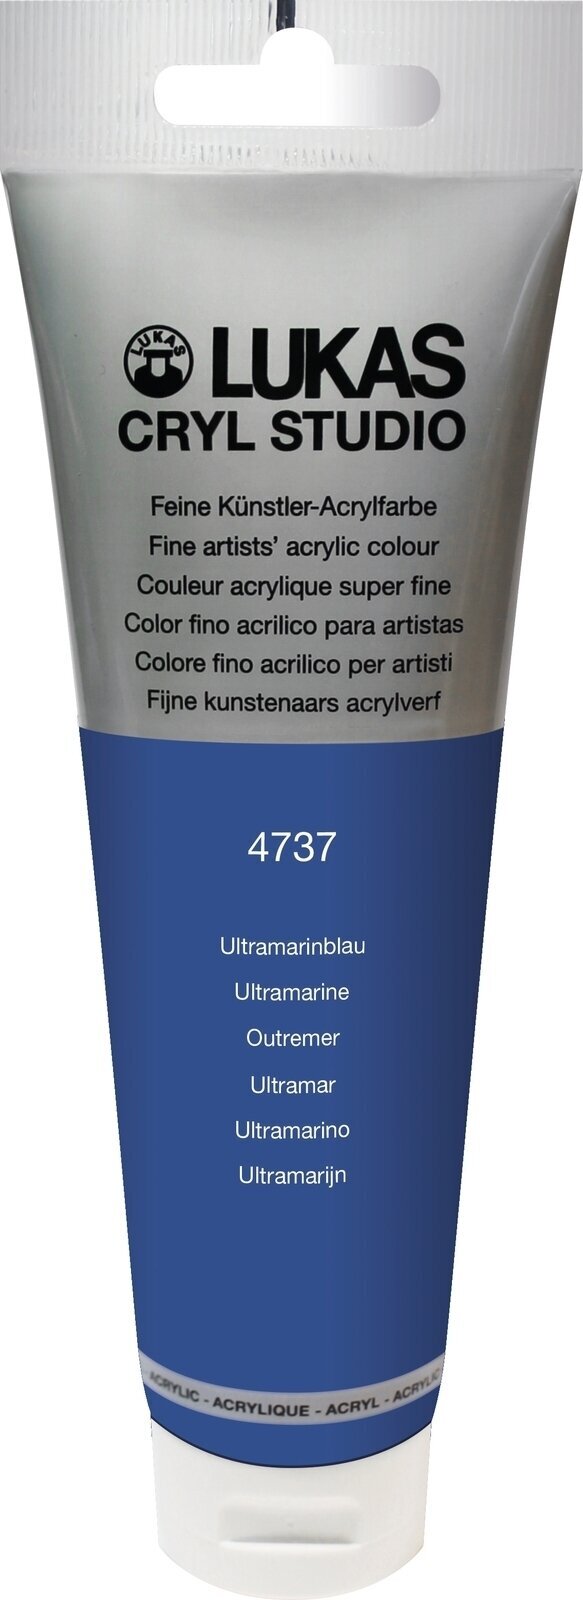 Akrylová farba Lukas Cryl Studio Acrylic Paint Plastic Tube Akrylová farba Ultramarine 125 ml 1 ks